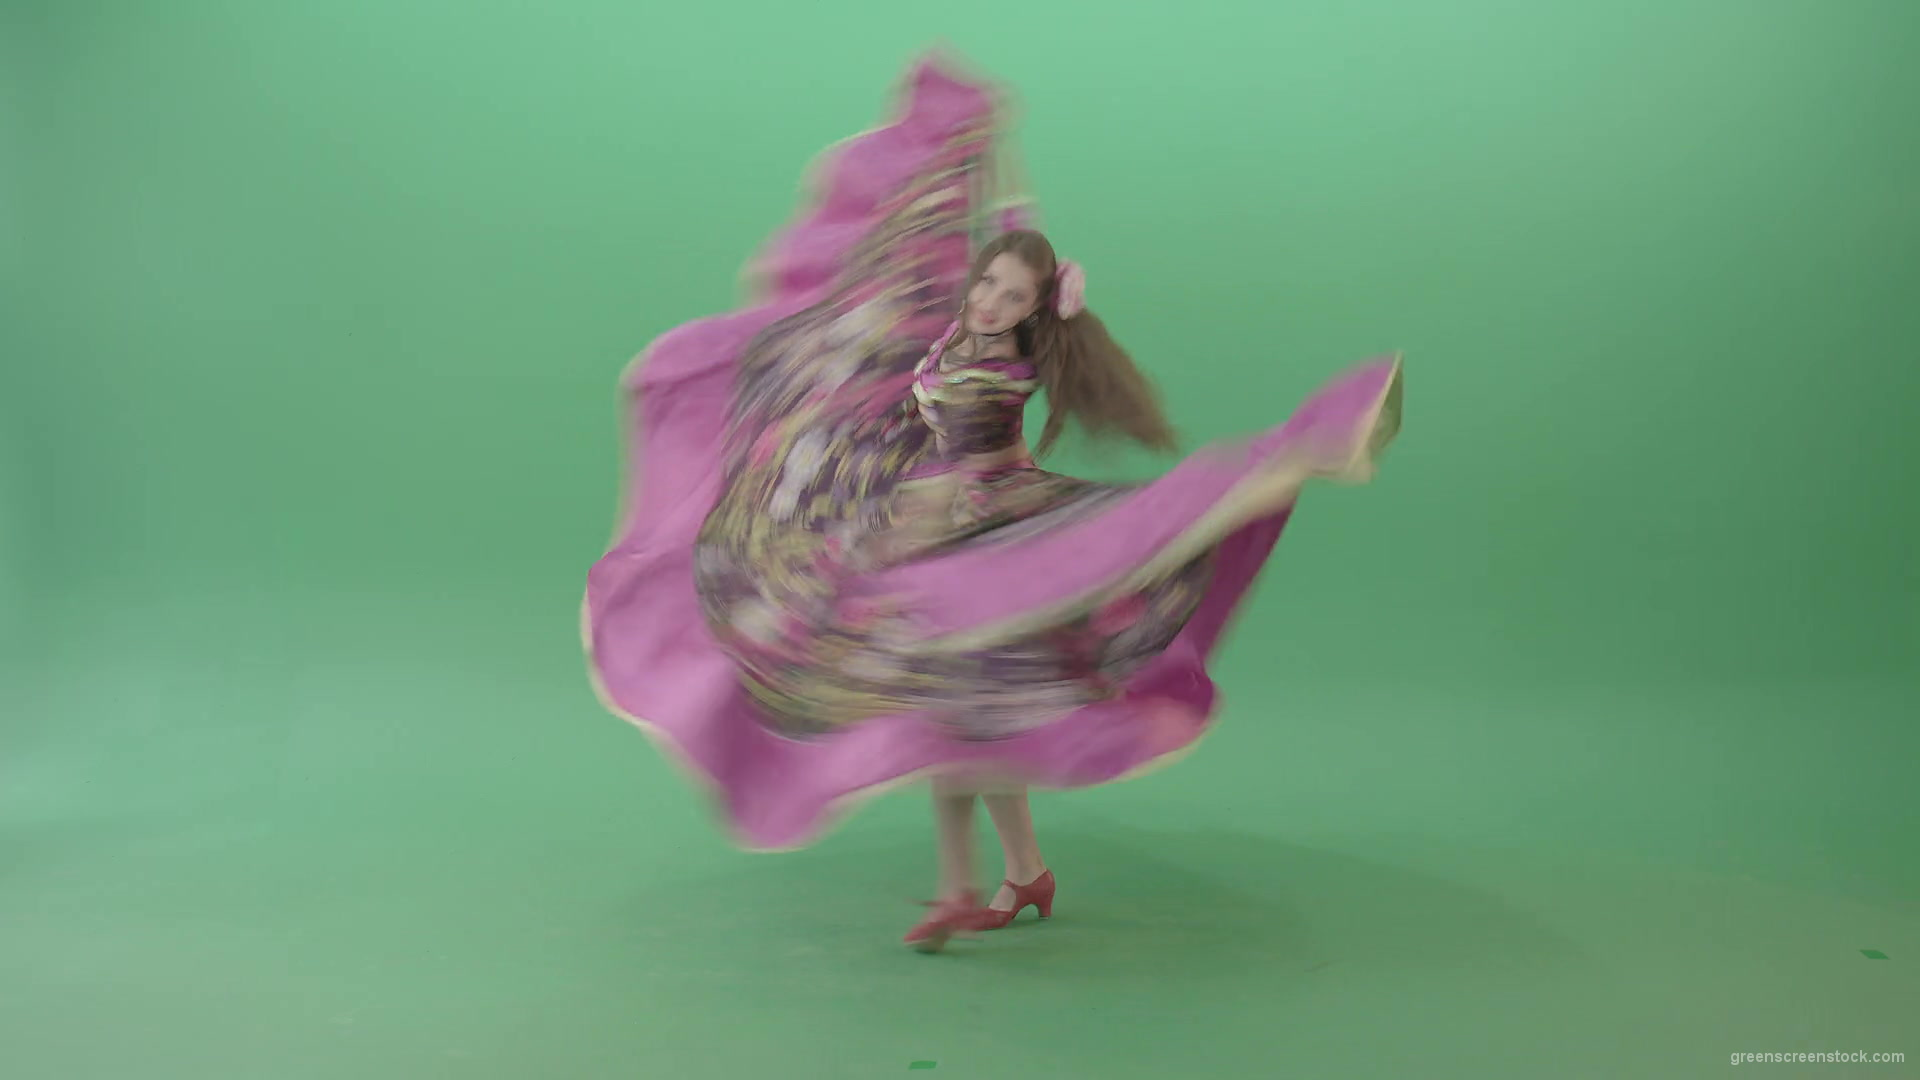 Beautiful-girl-in-balkan-pink-dress-dancing-gypsy-folk-dance-isolated-on-green-screen-4K-Video-Clip-1920_007 Green Screen Stock